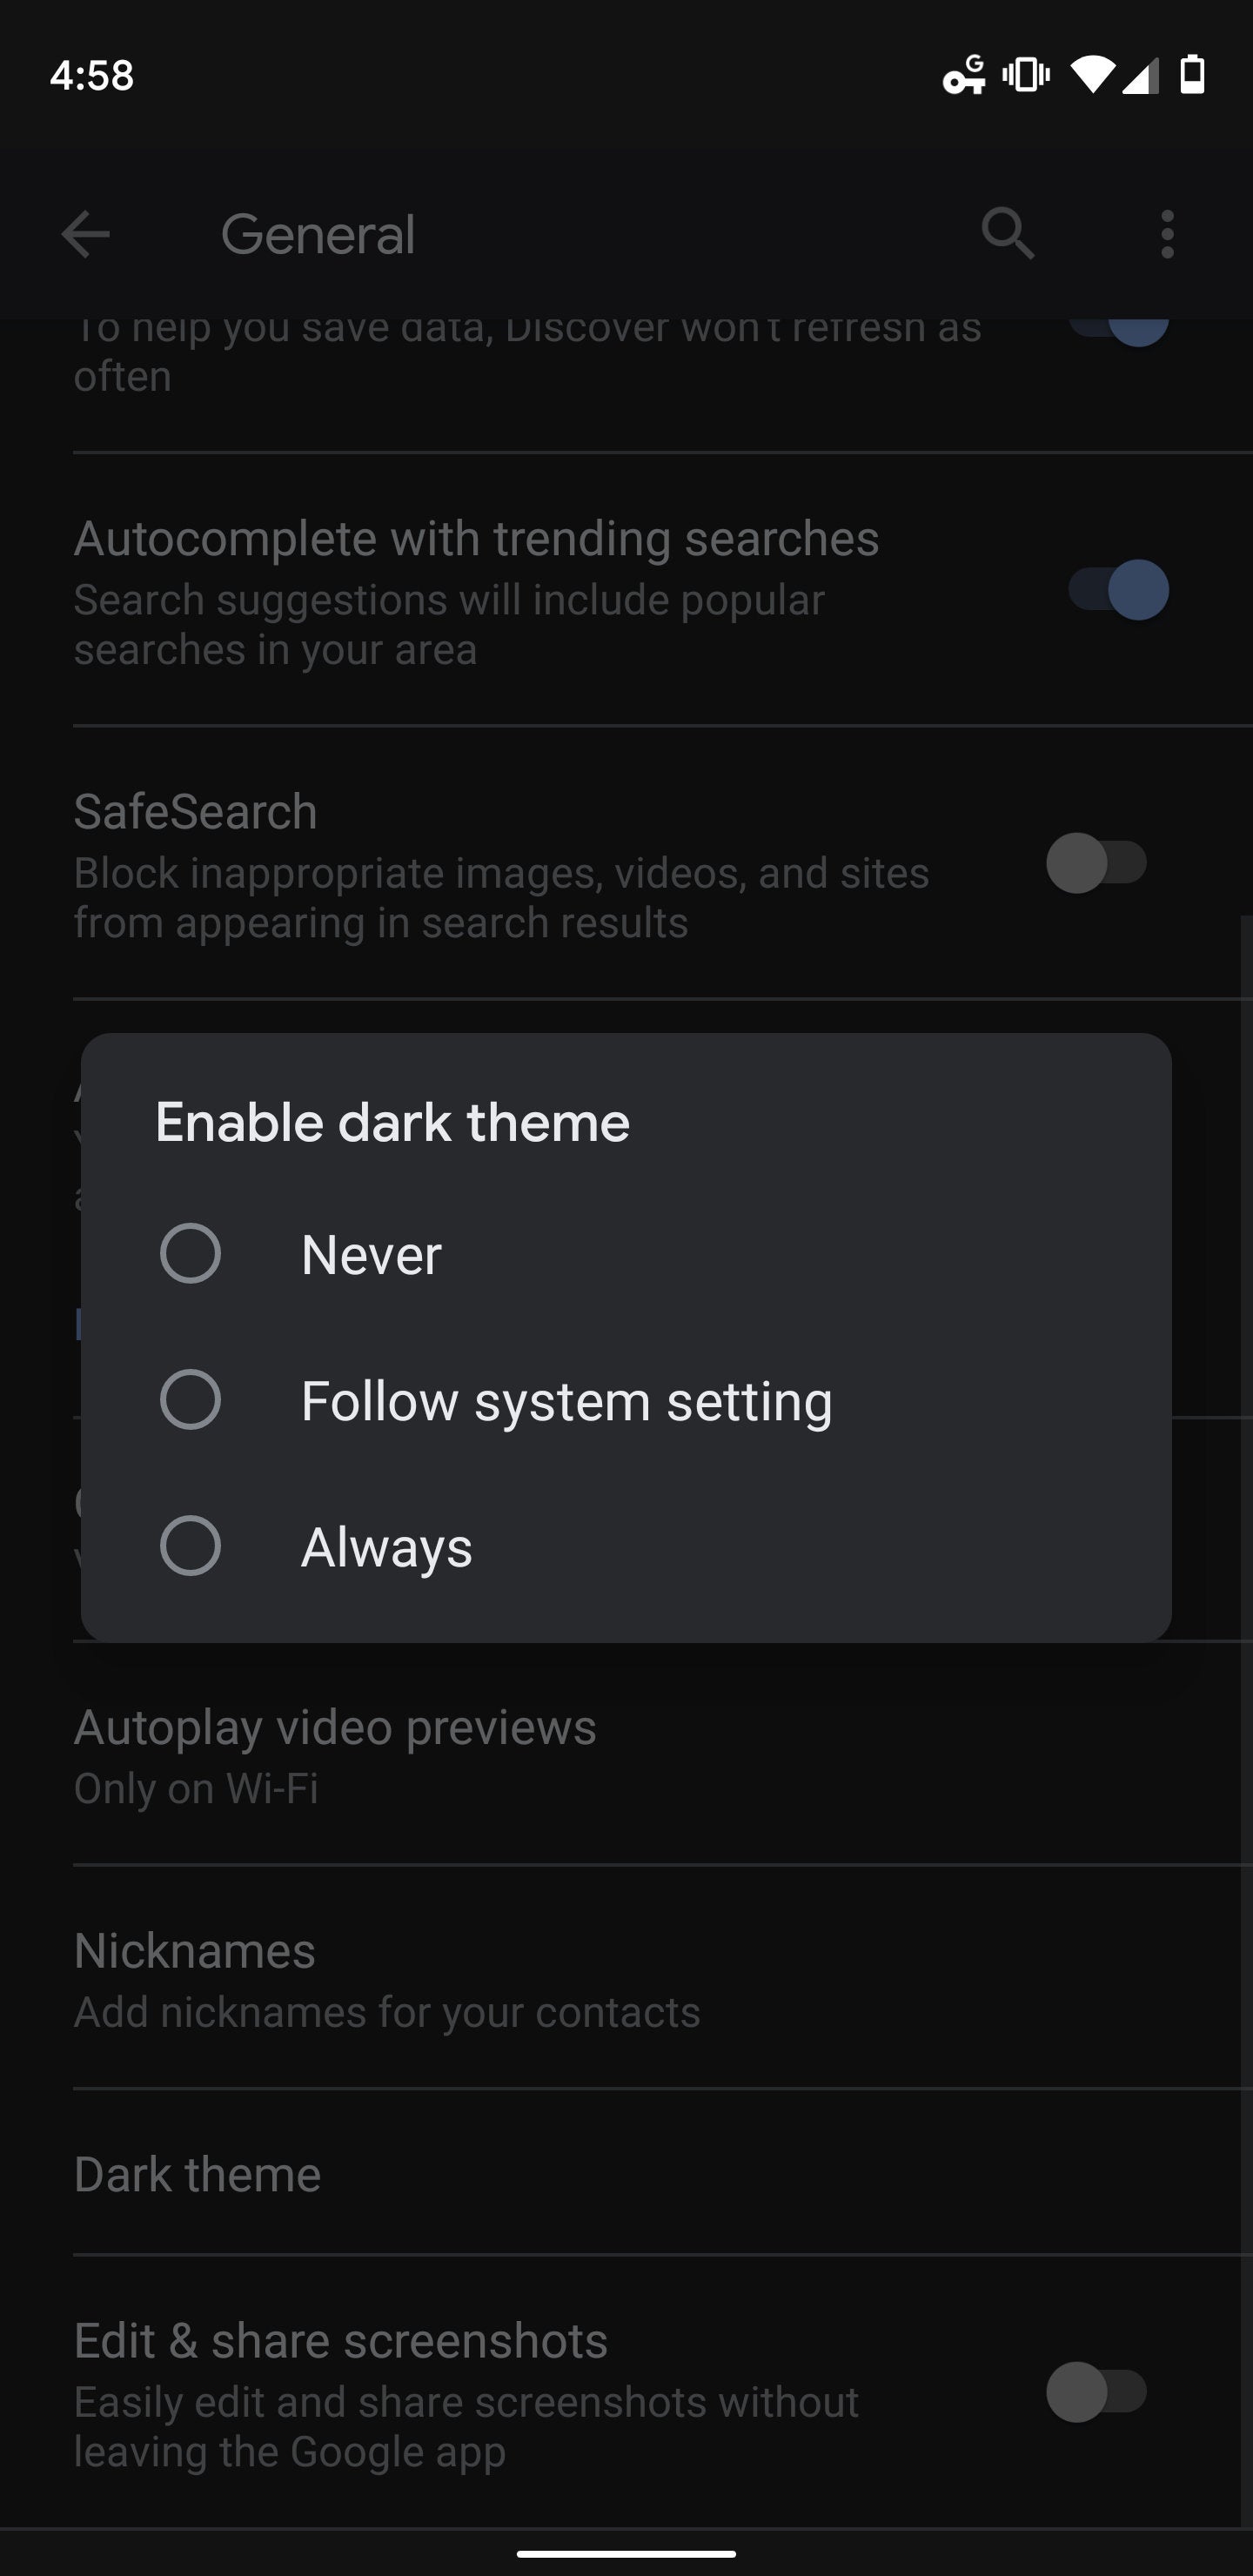 Google app soon to receive full-fledged dark mode